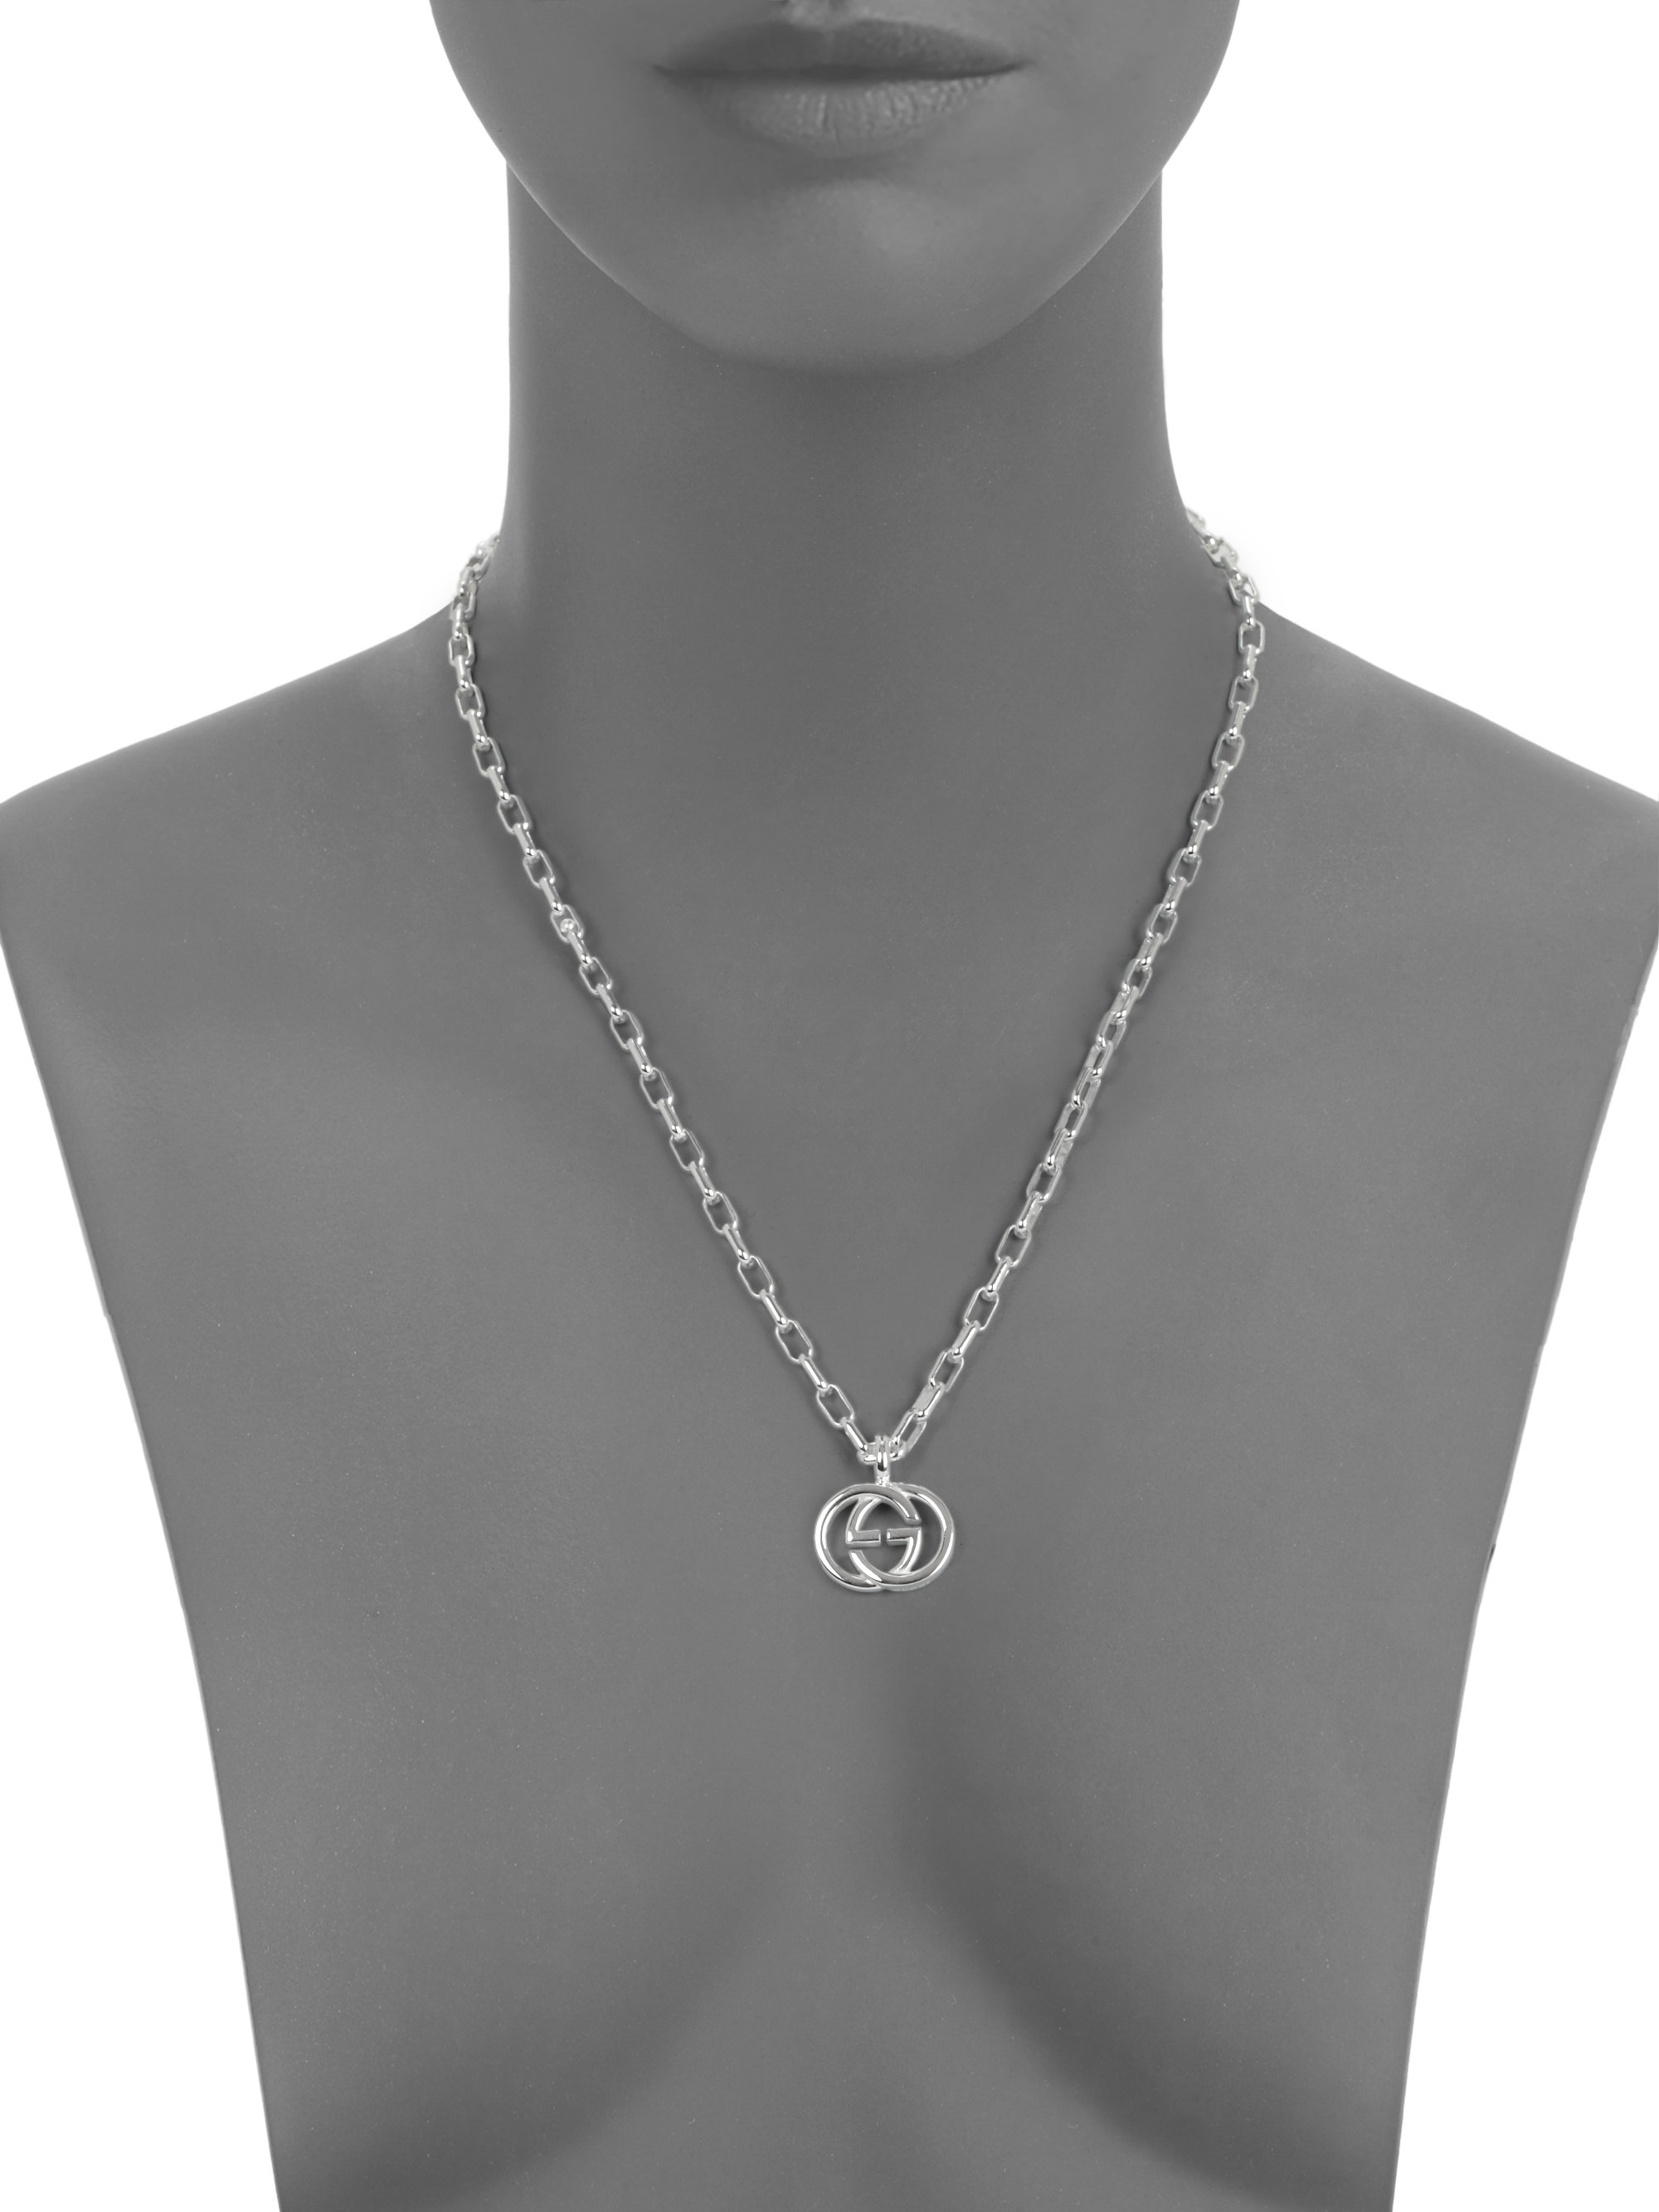 interlocking g necklace in silver, OFF 